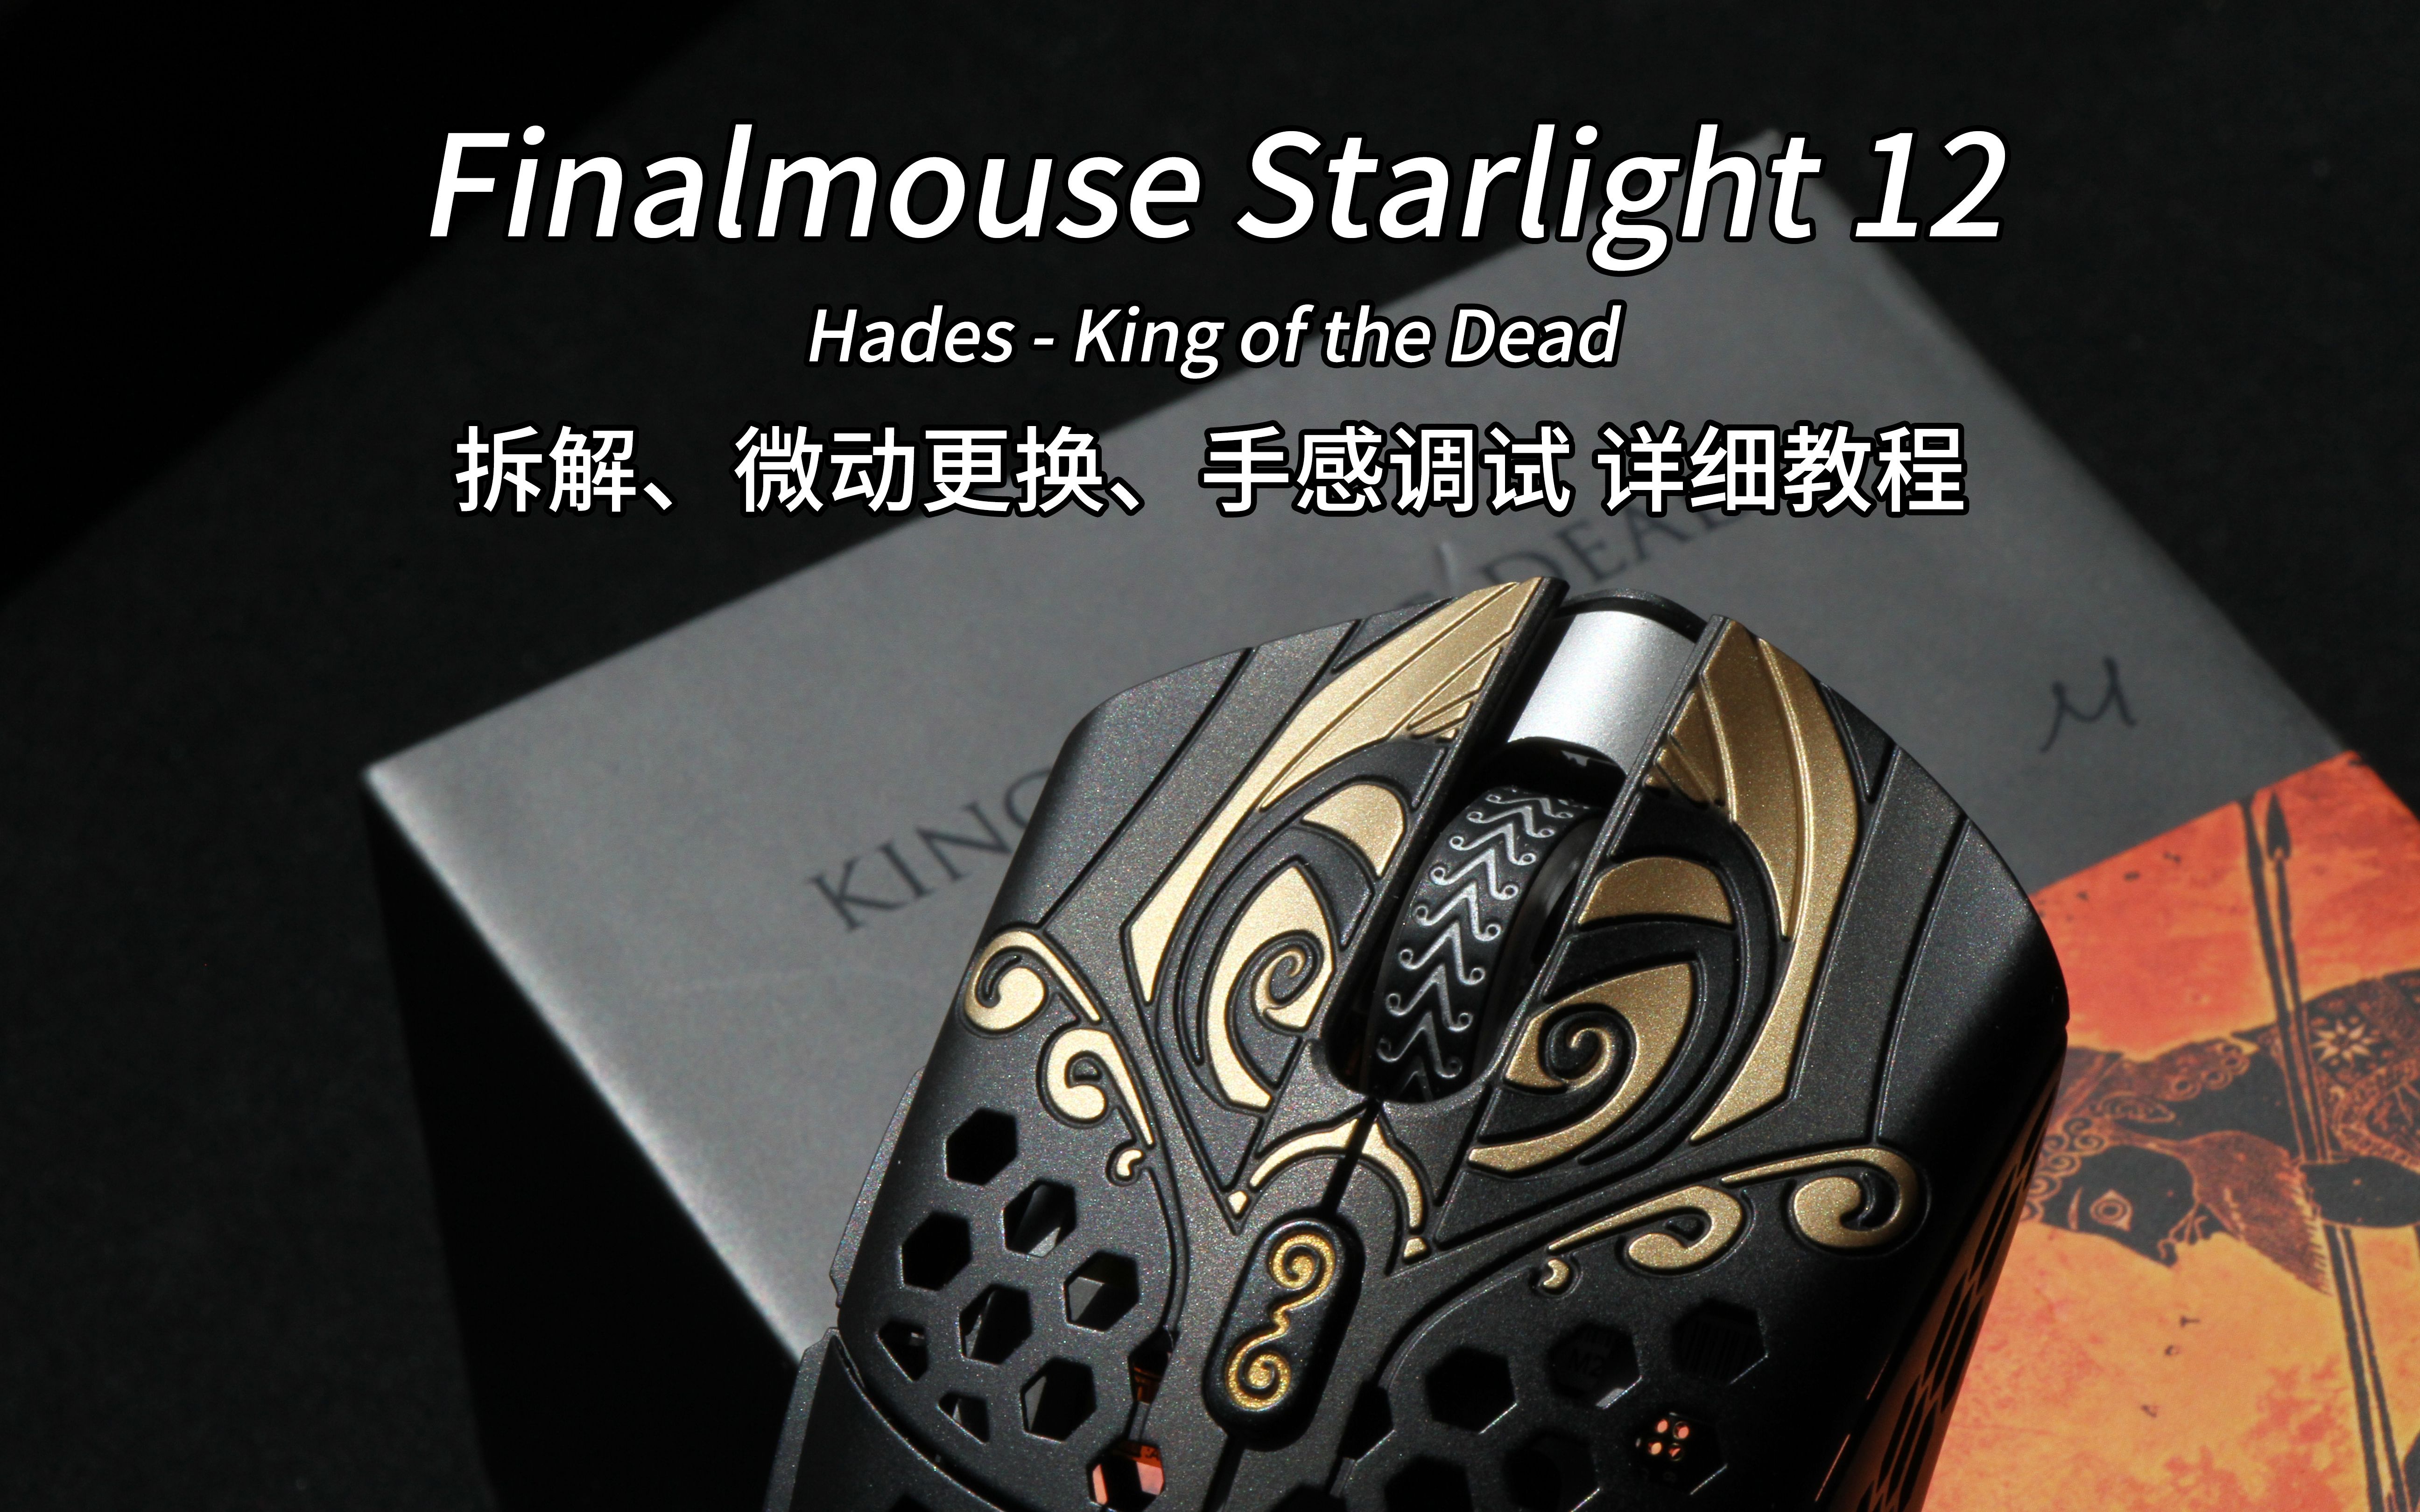 PC/タブレット PC周辺機器 33000円安 新品・在庫品 finalmouse starlight 12 Hades small 666番 